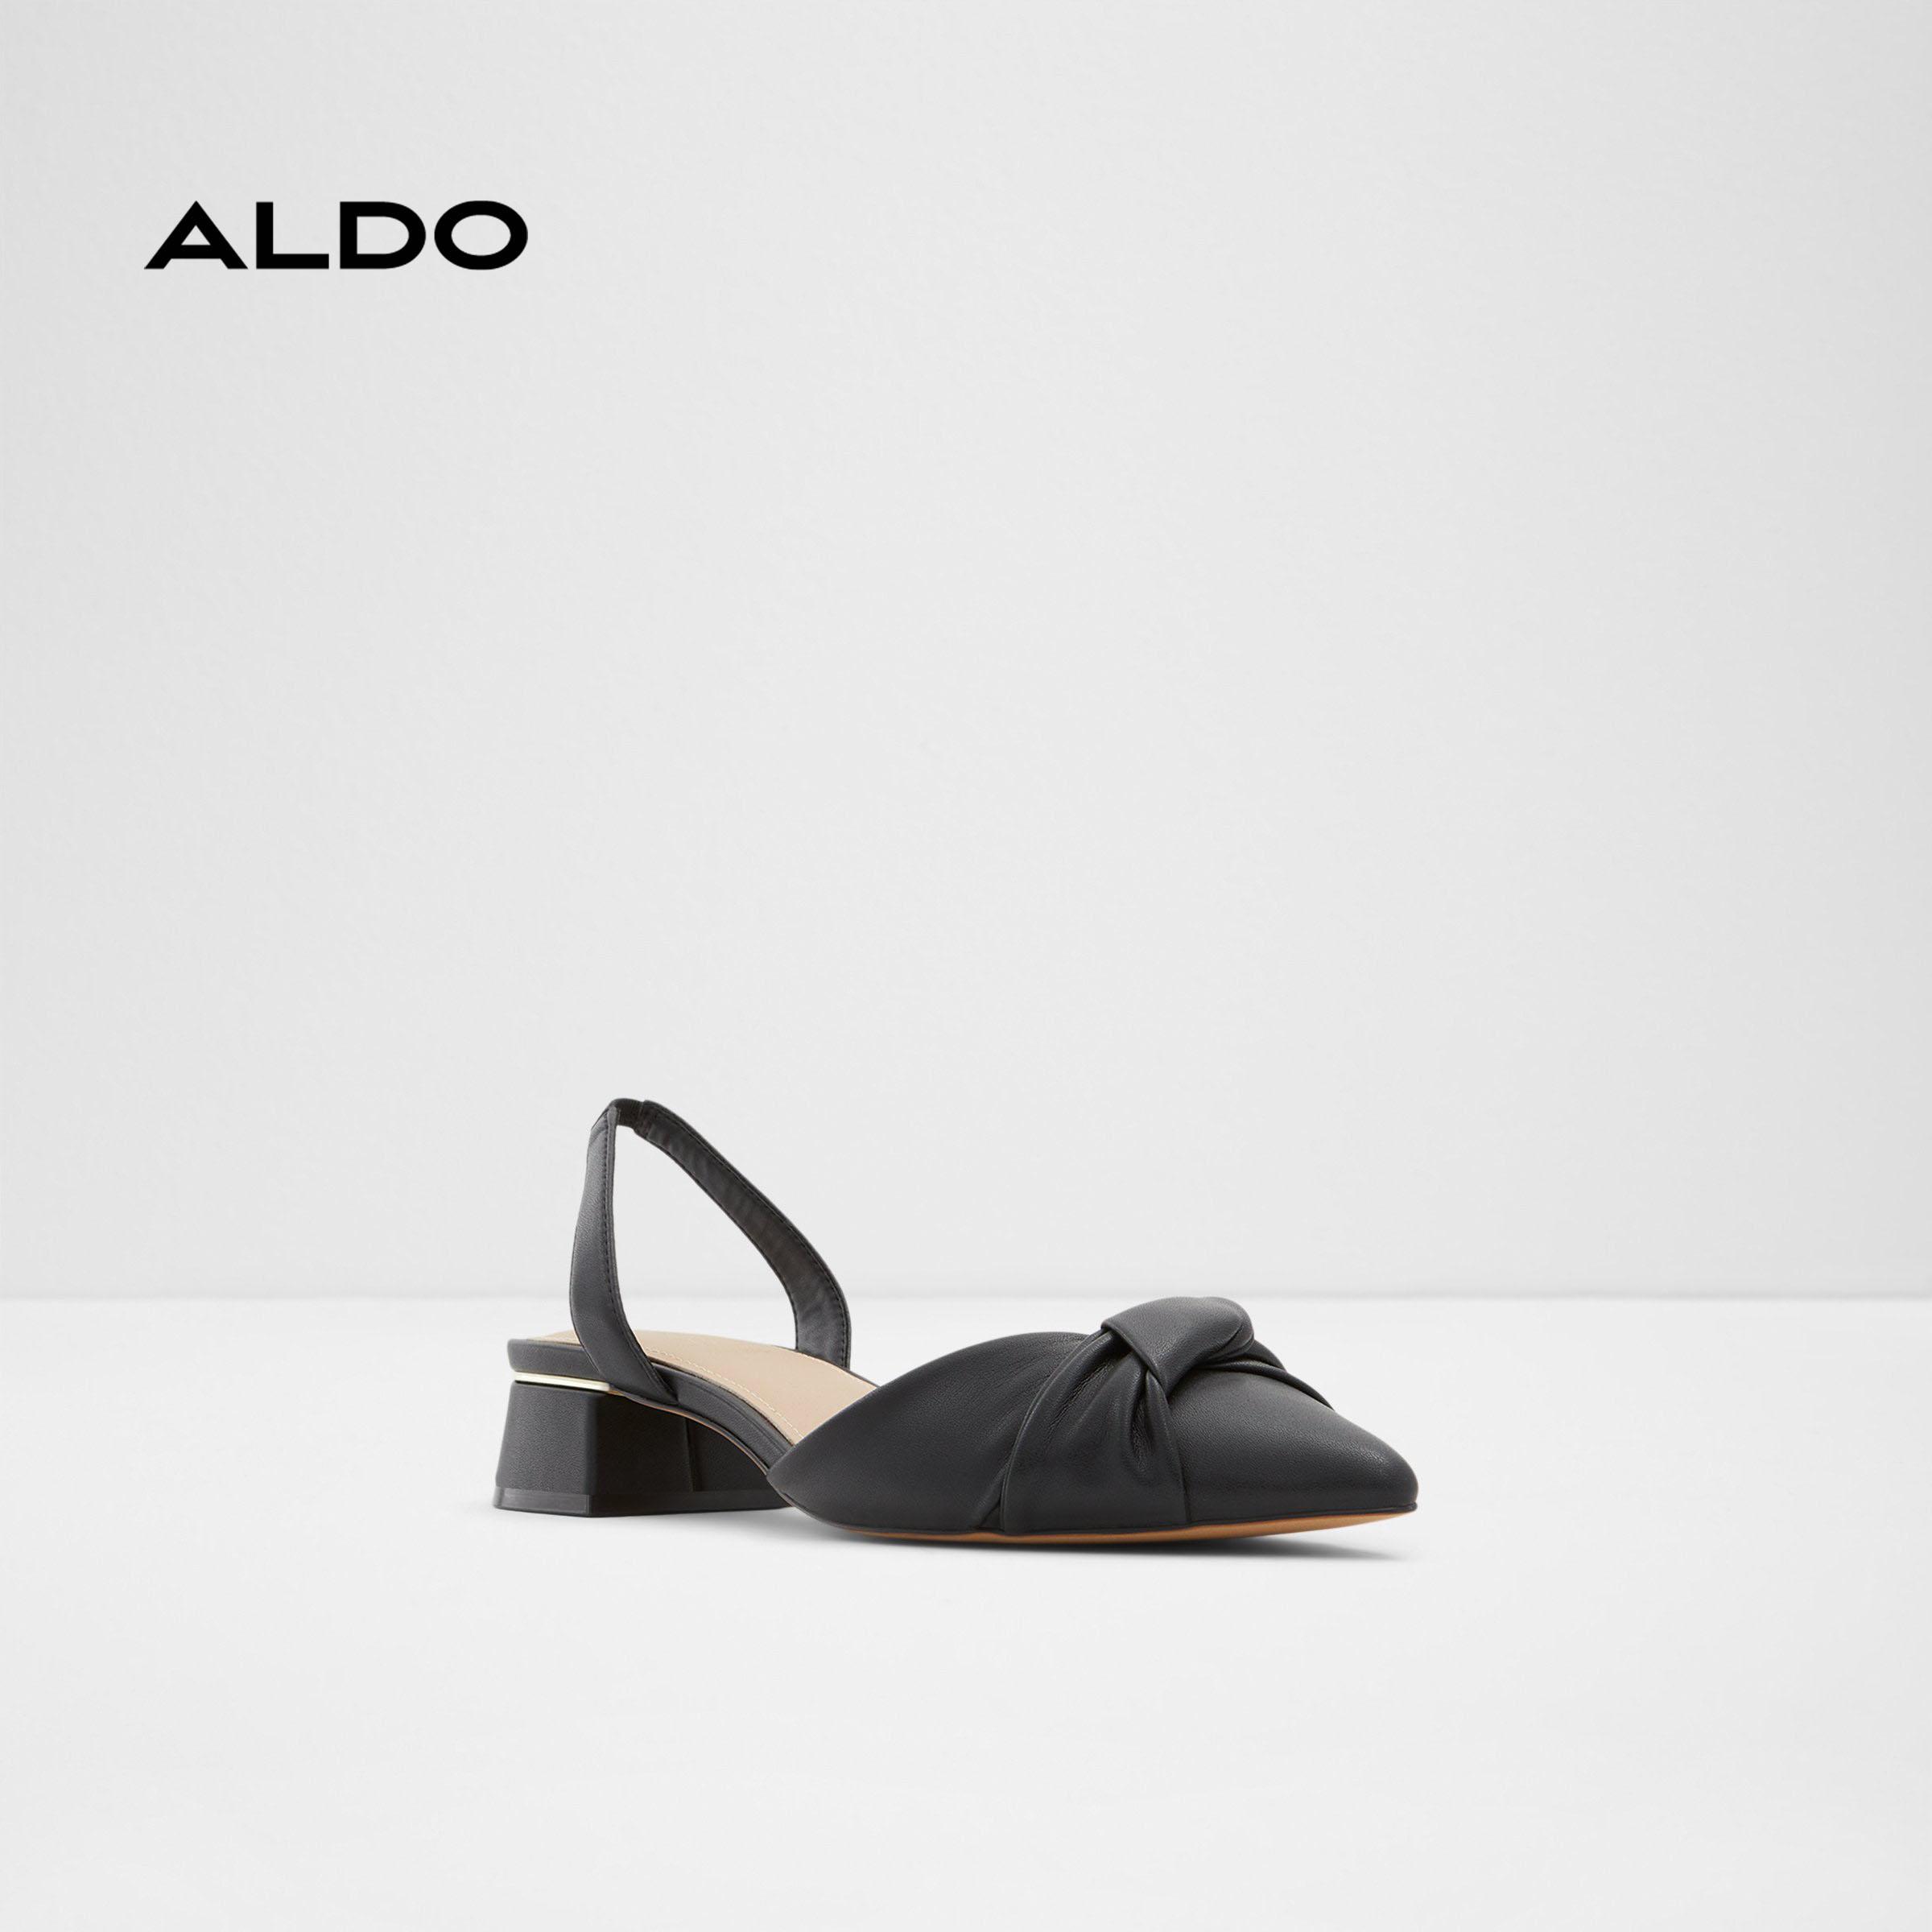 Sandal cao gót nữ Aldo BREIDDA